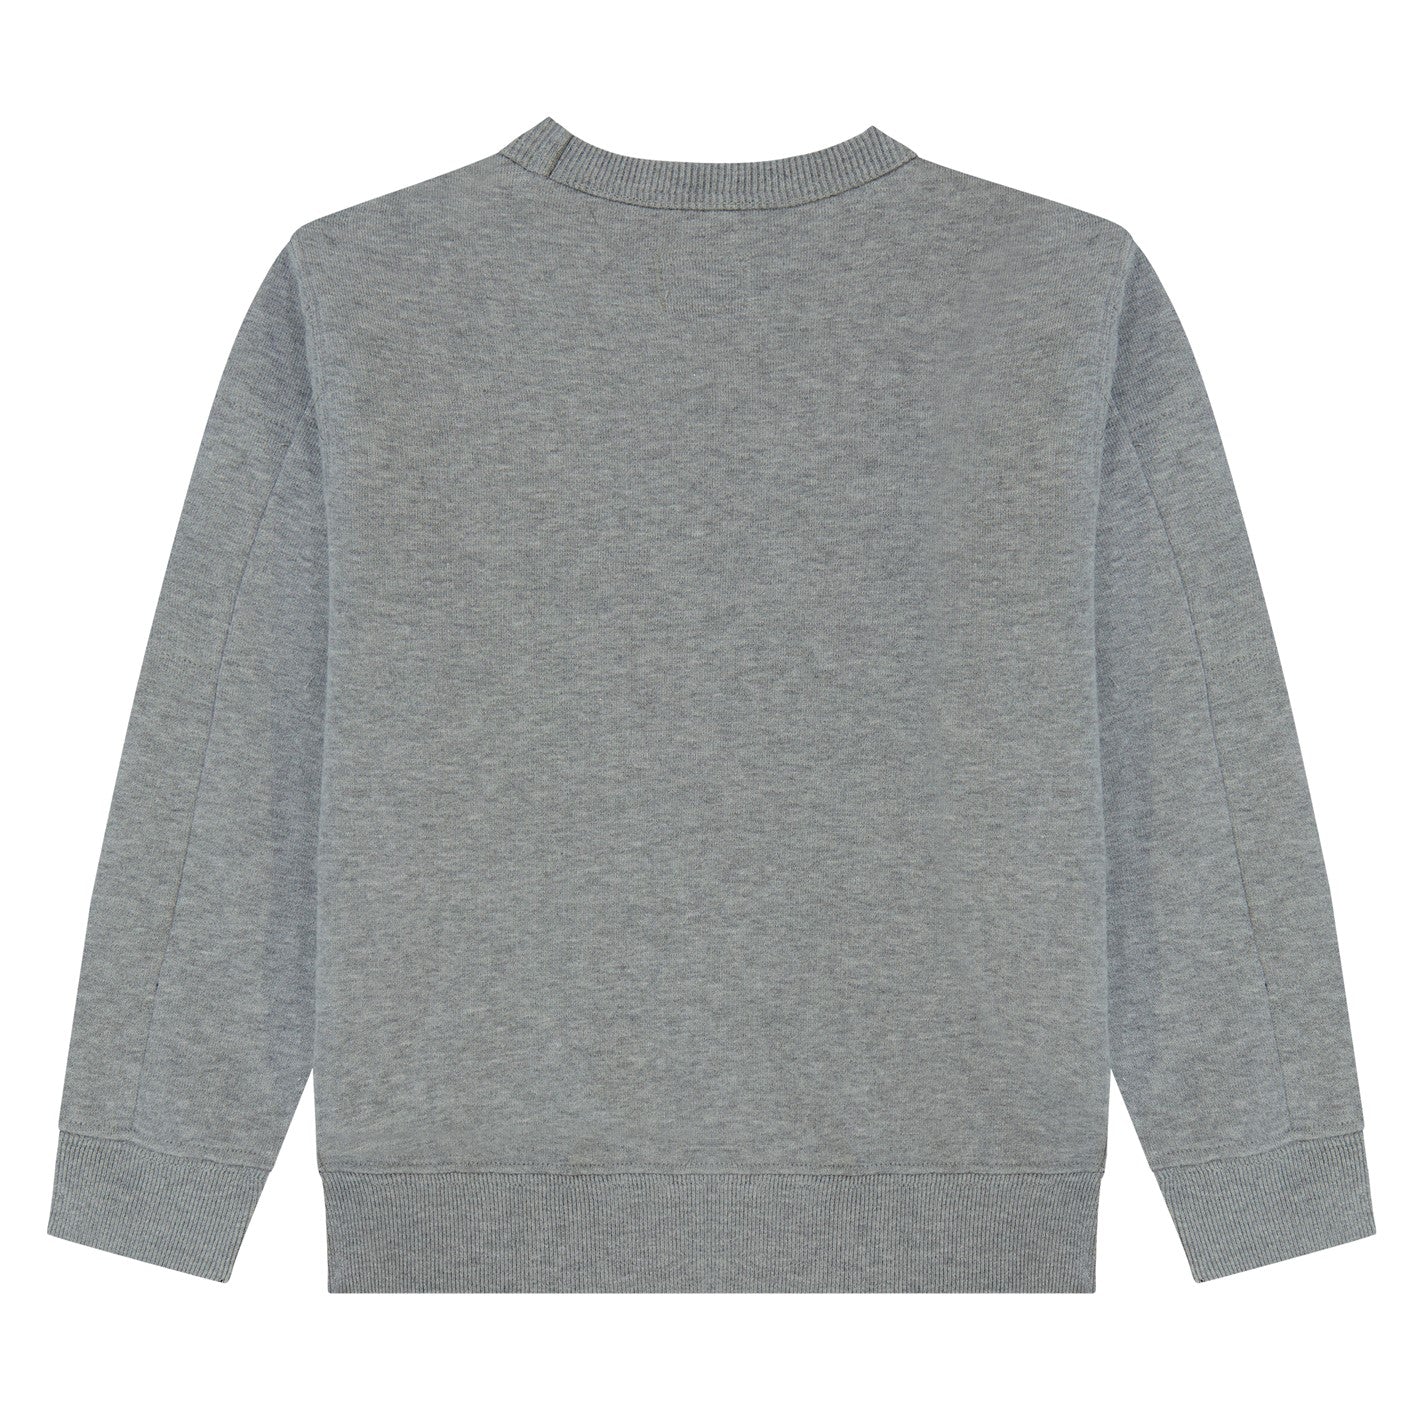 Kids CP Company Grey Lens Sweatshirt - DANYOUNGUK